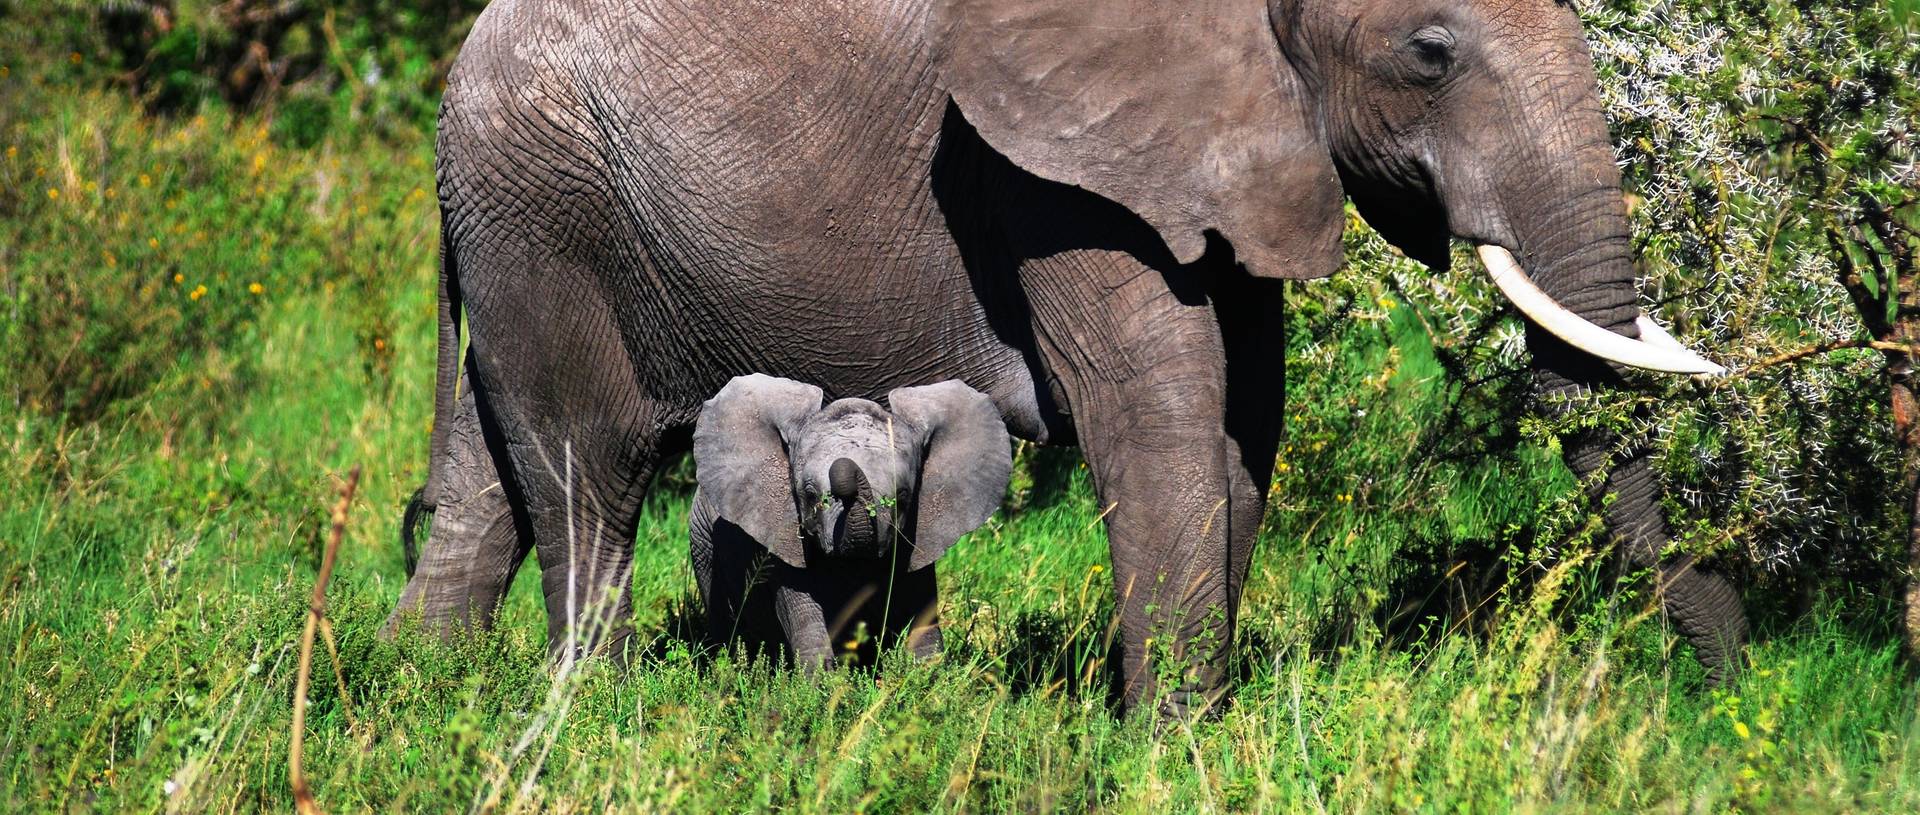 Serengeti NP, Elephant And Cub